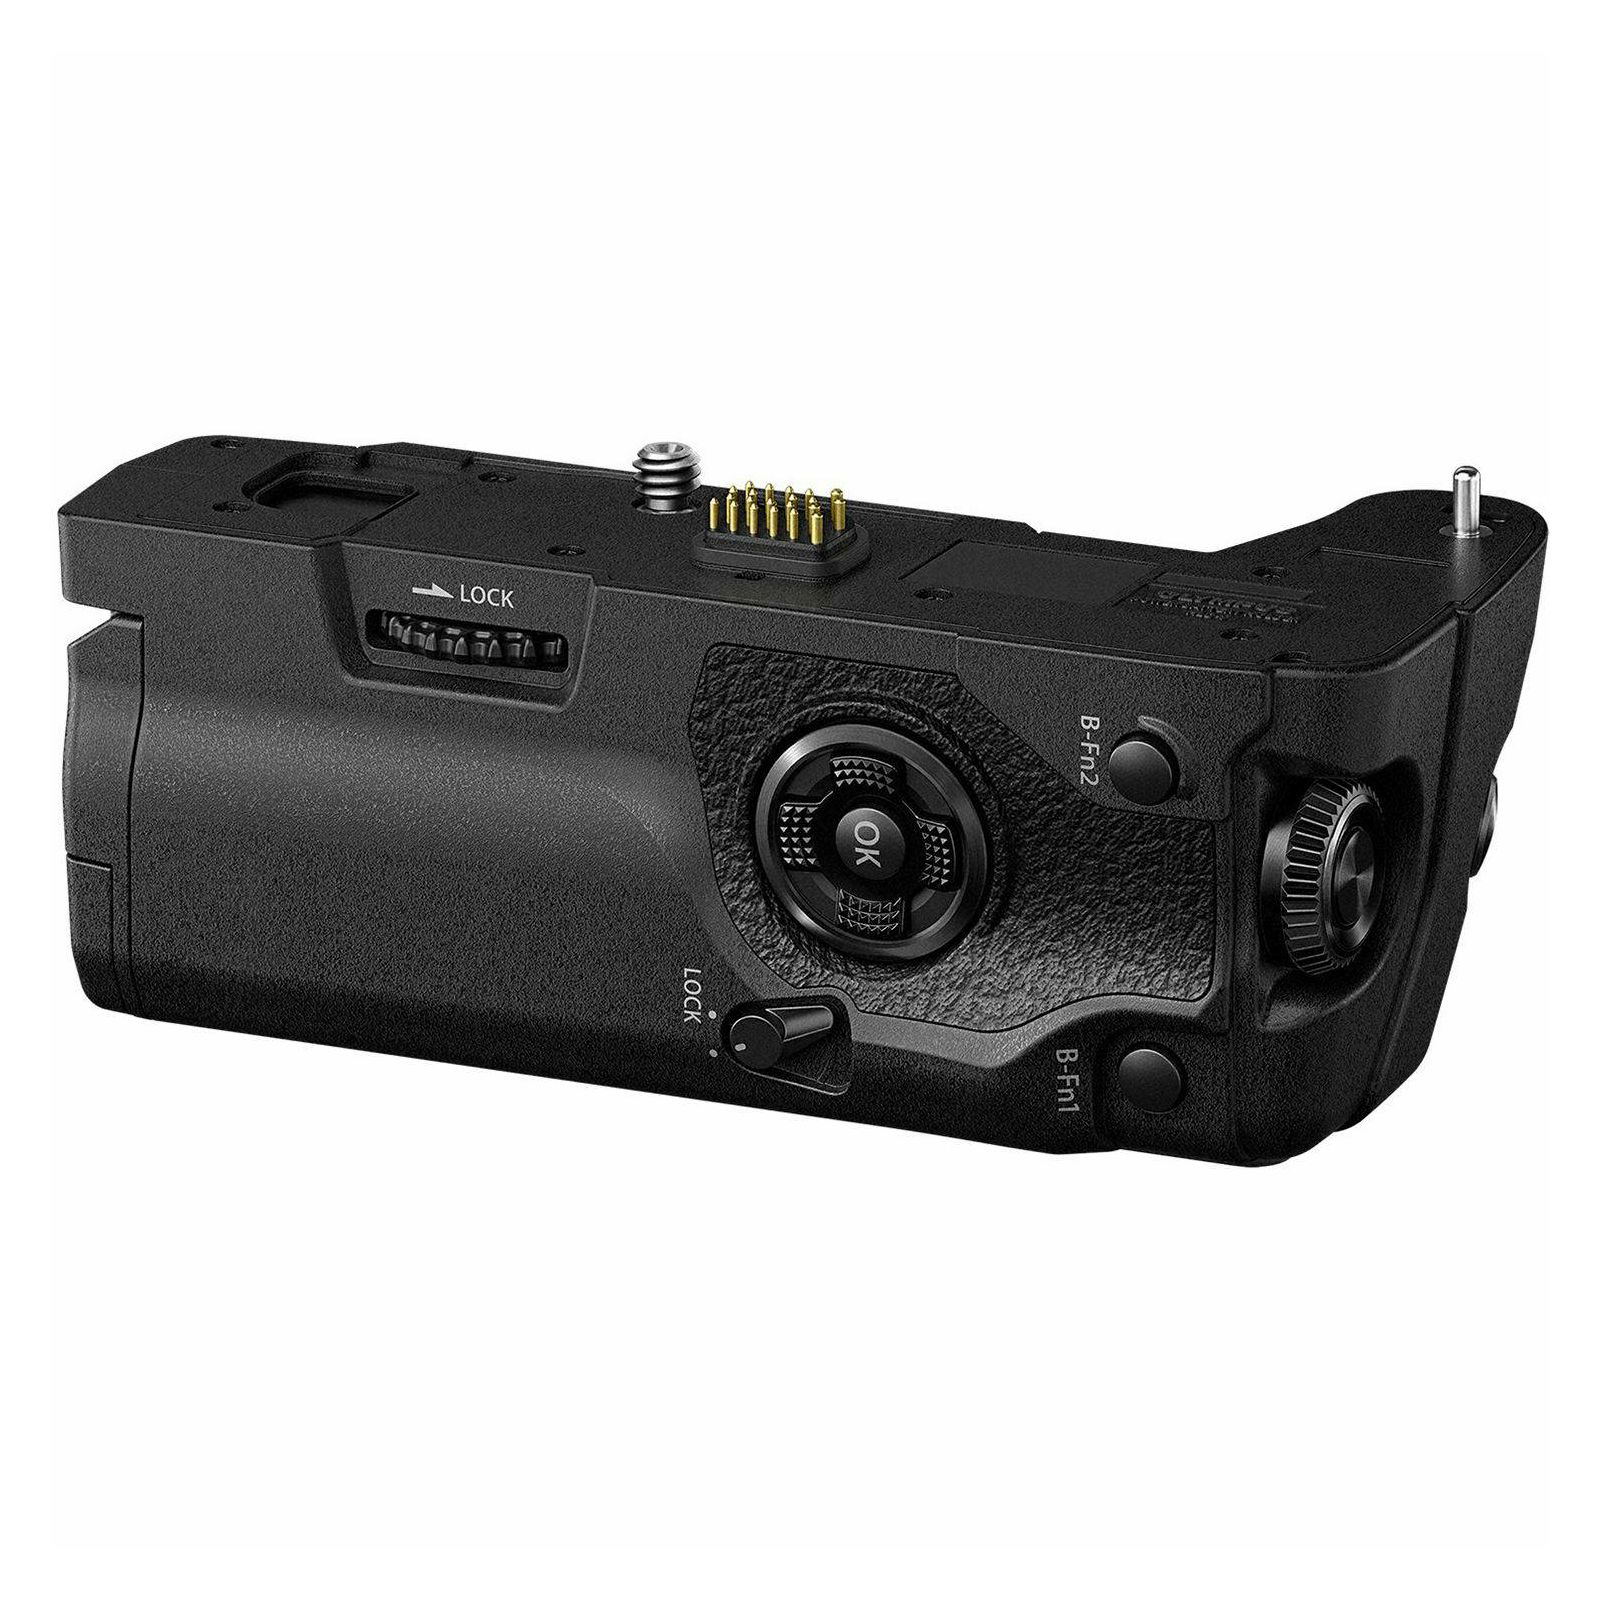 Olympus HLD-9 Power Battery Grip Holder for E-M1 Mark II (for one BLH-1) držač baterija za fotoaparat (V328180BW000)